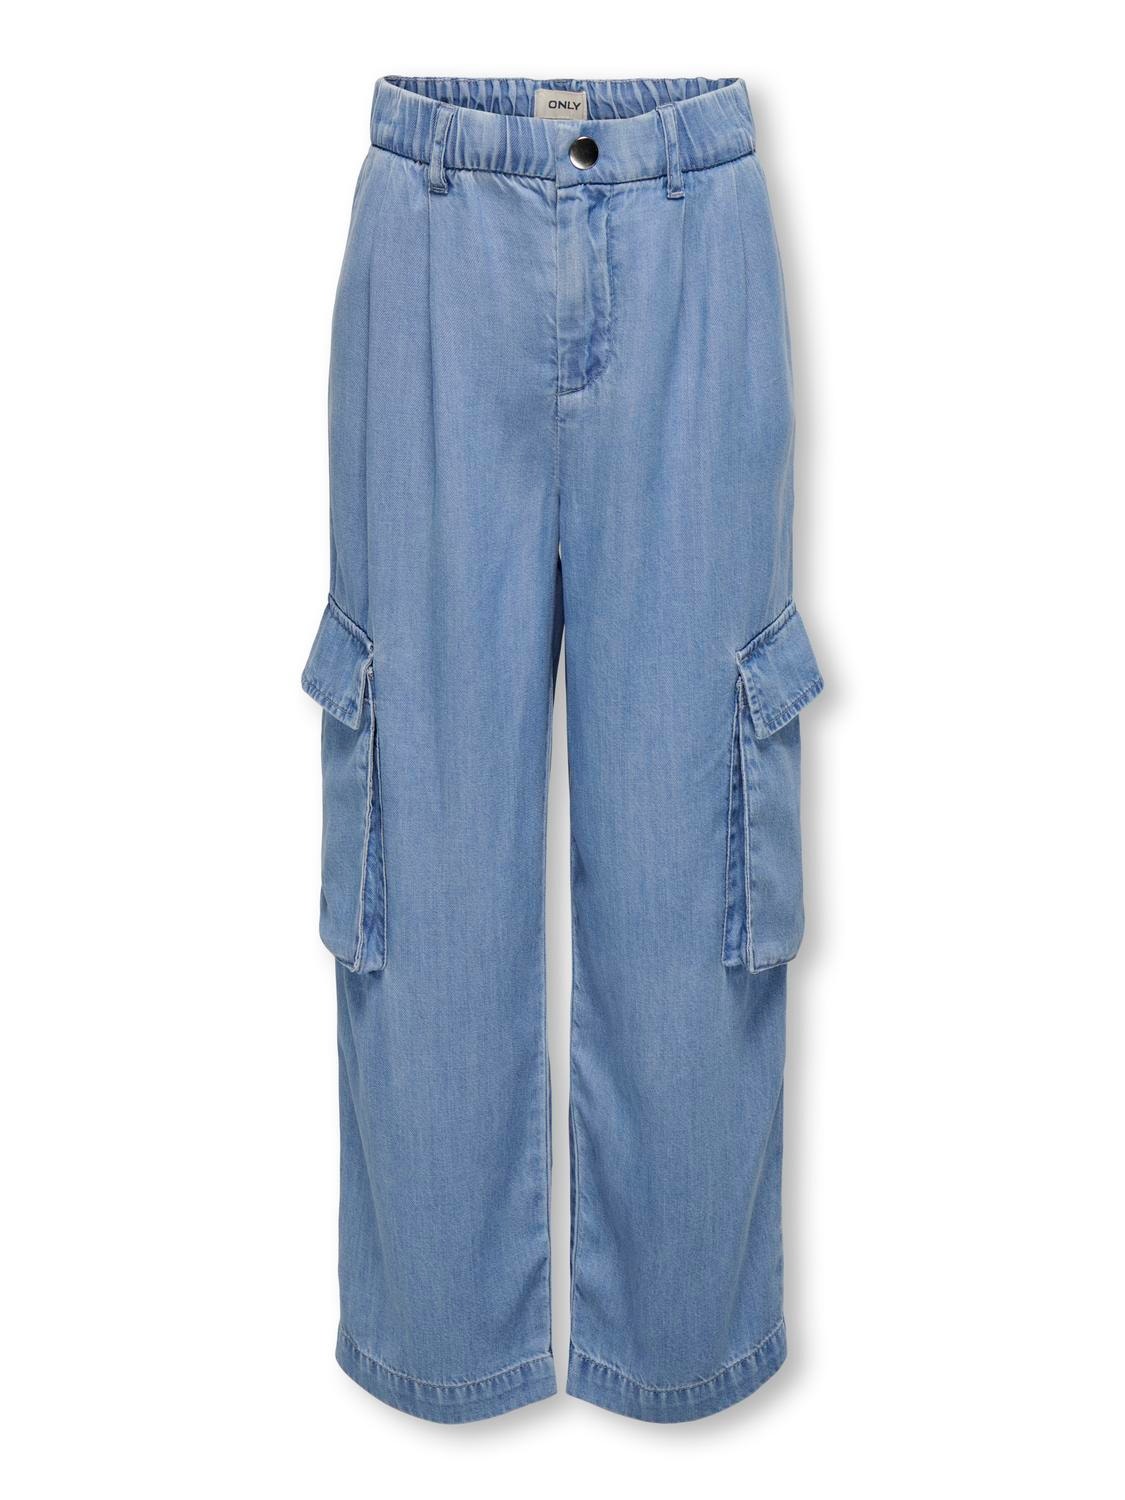 ONLY Jeans Wide Leg Fit -Medium Blue Denim - 15319704